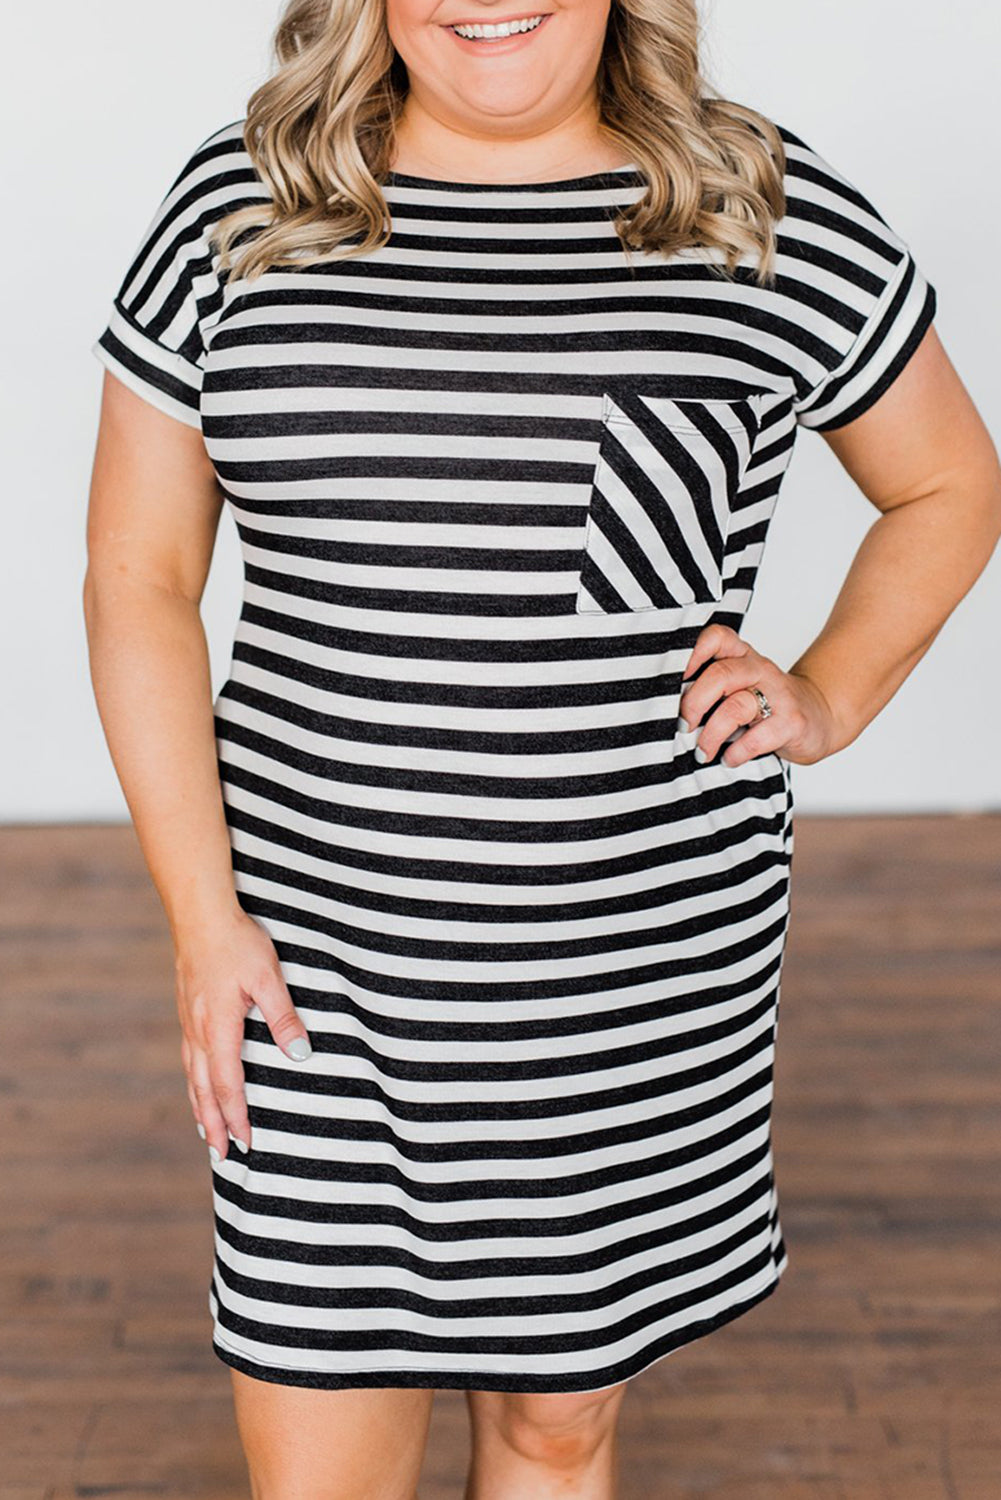 Black And White Striped Plus Size Dress